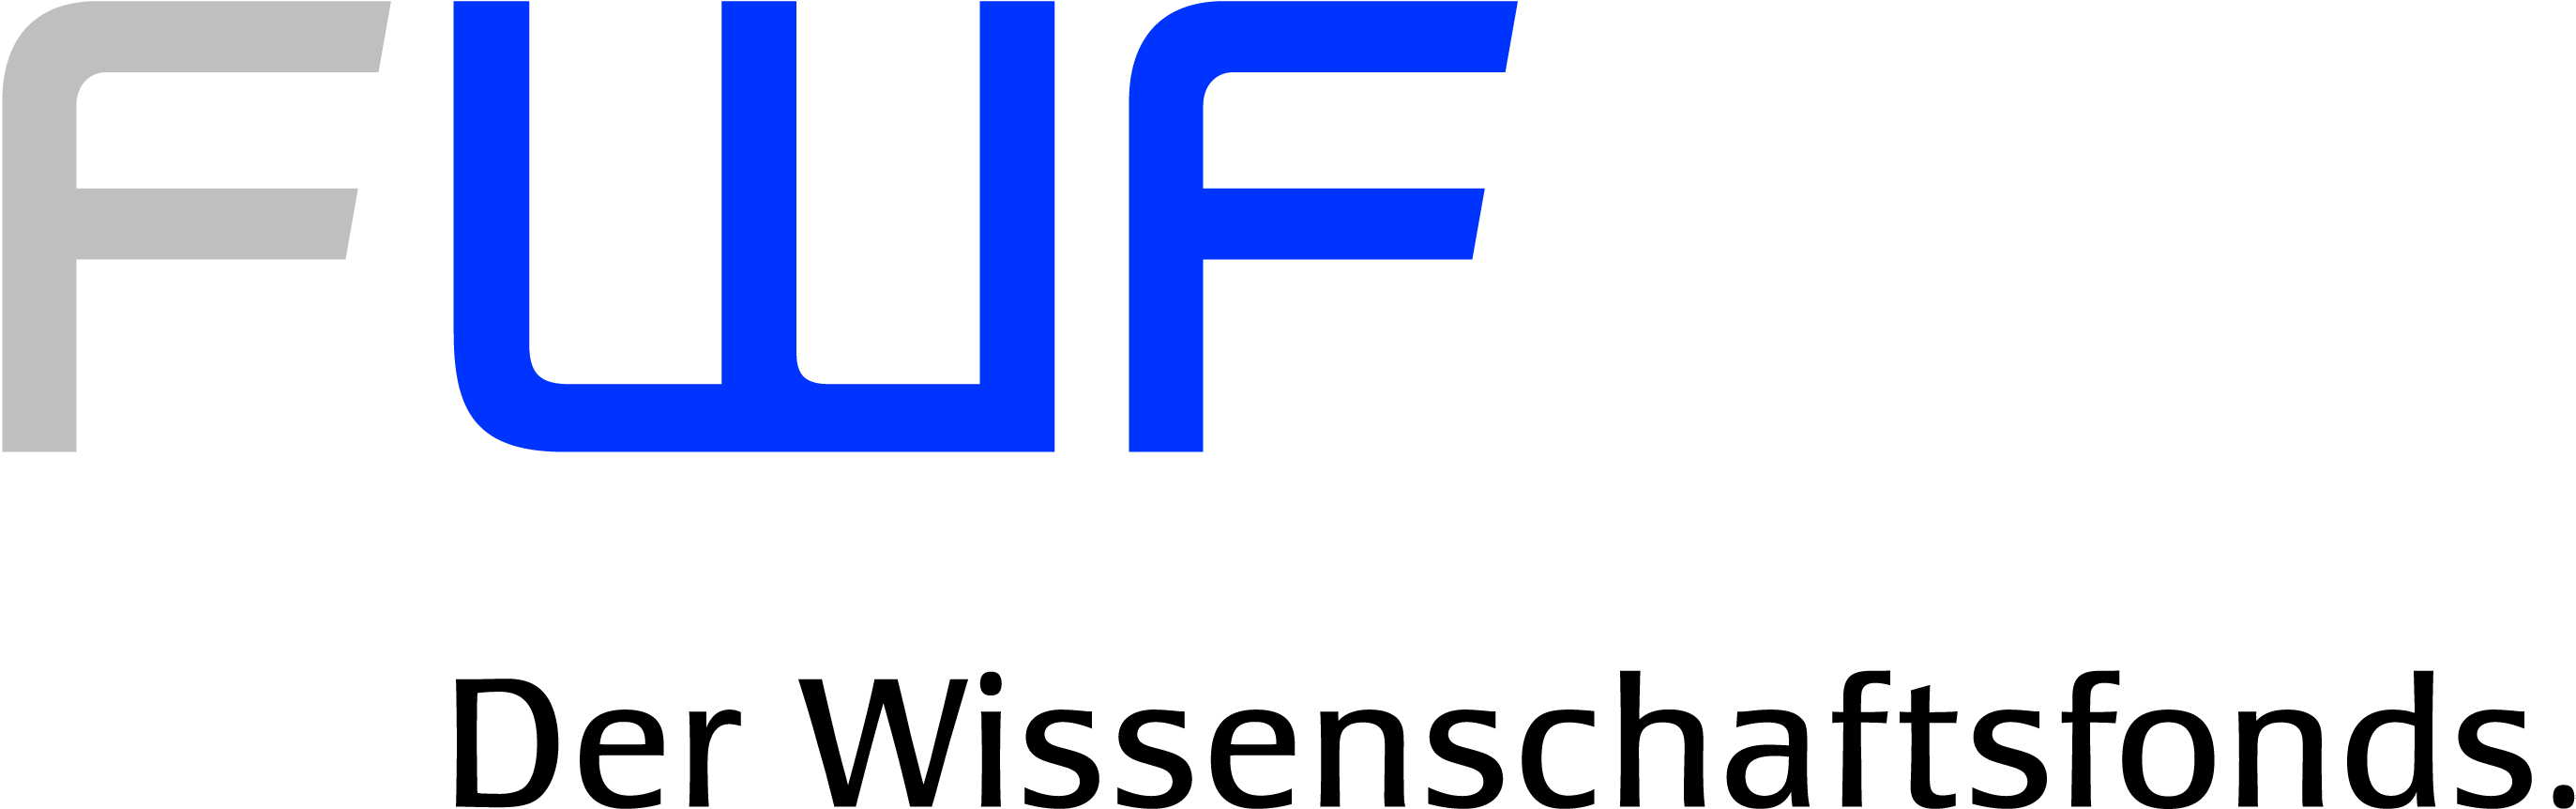 https://www.fwf.ac.at/fileadmin/files/Images/News_Presse/Presse/Logo/fwf-logo_var2.jpg